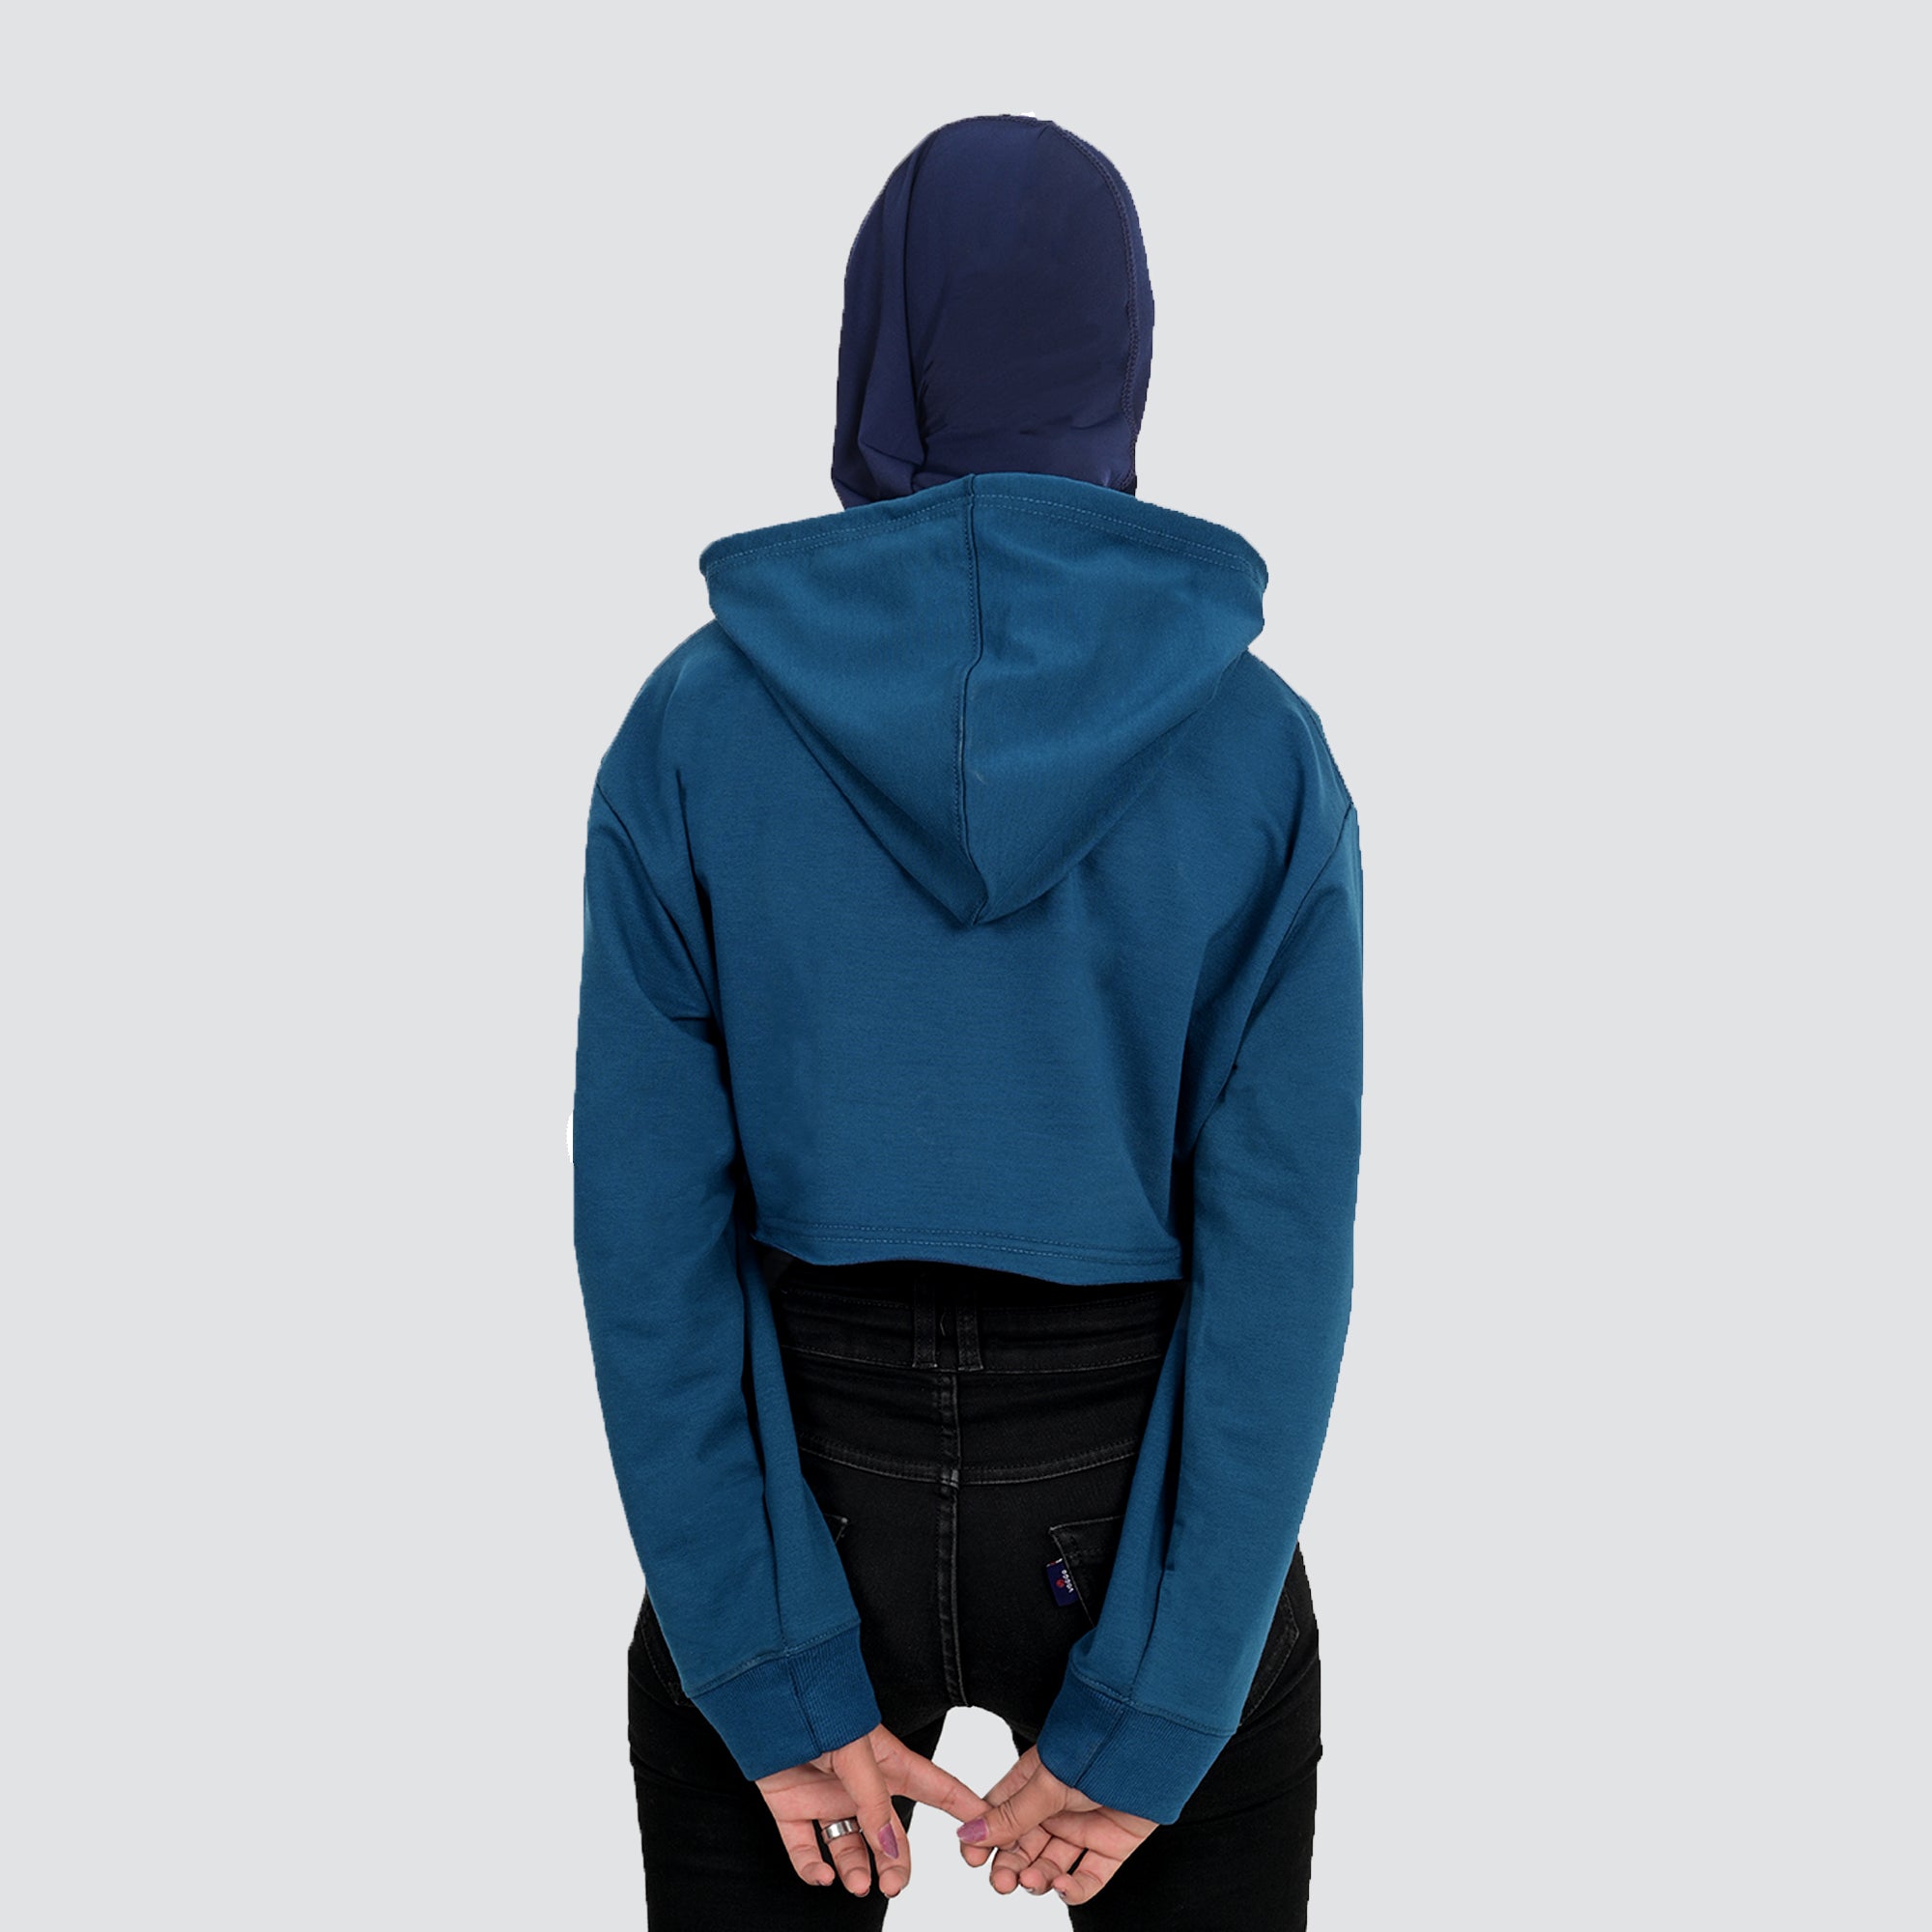 Womens Crop Top Zipper Hoodie - Turquoise